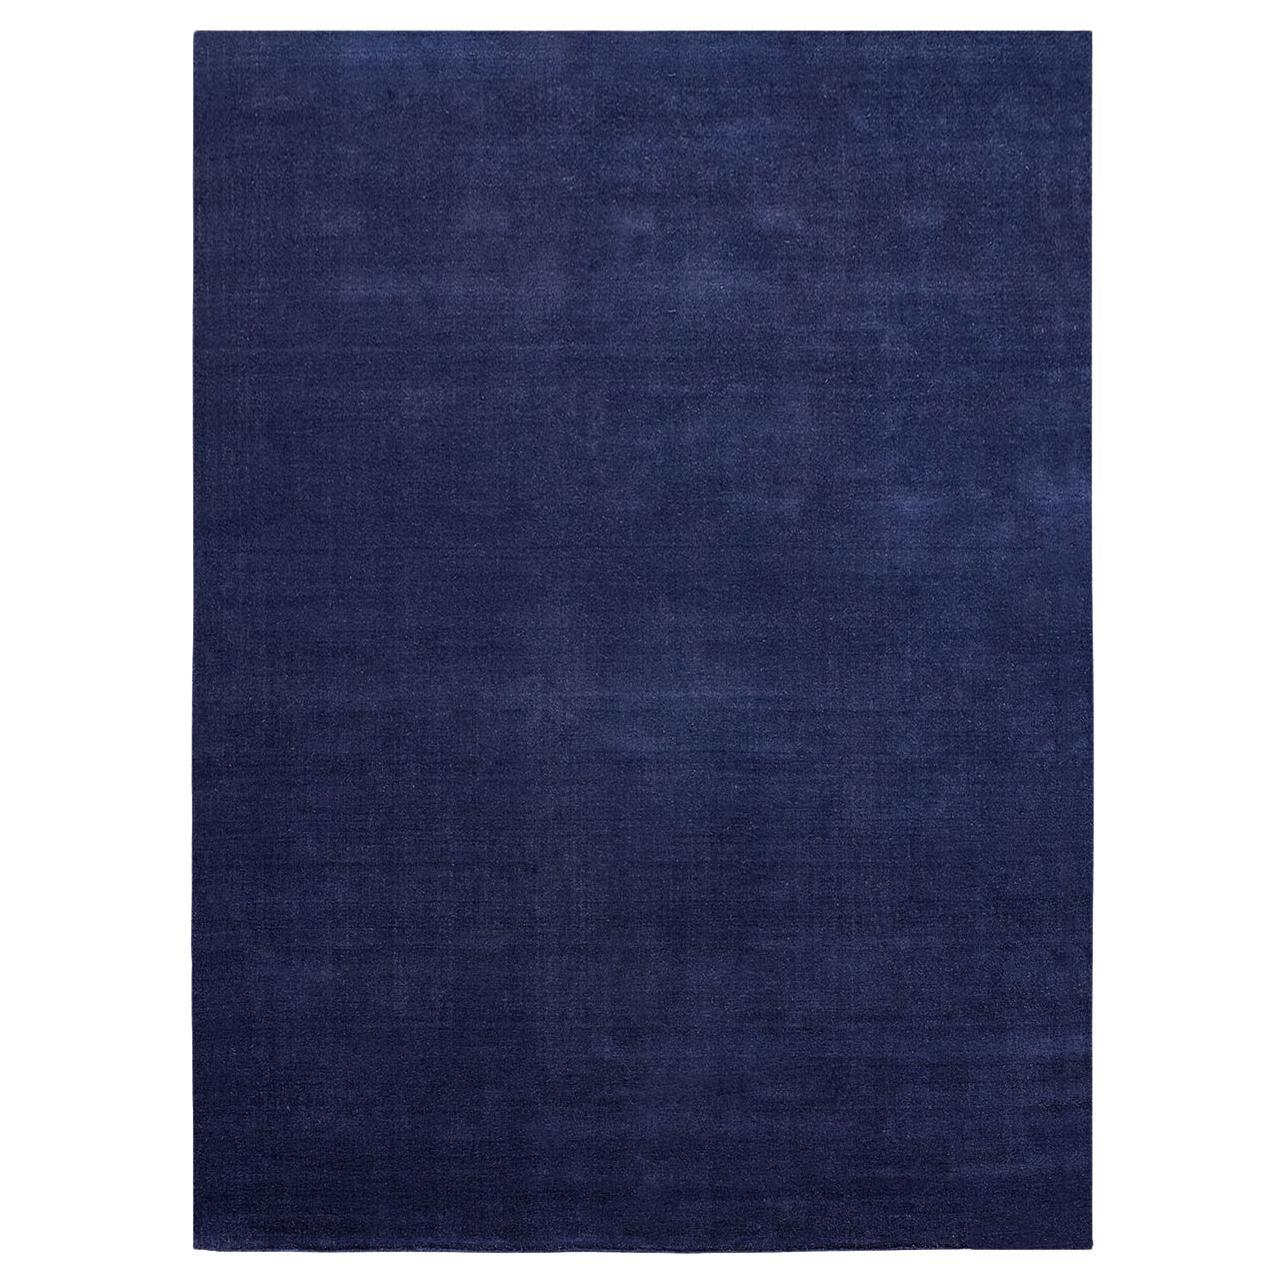 Vibrant Blue Earth Bamboo Carpet by Massimo Copenhagen For Sale